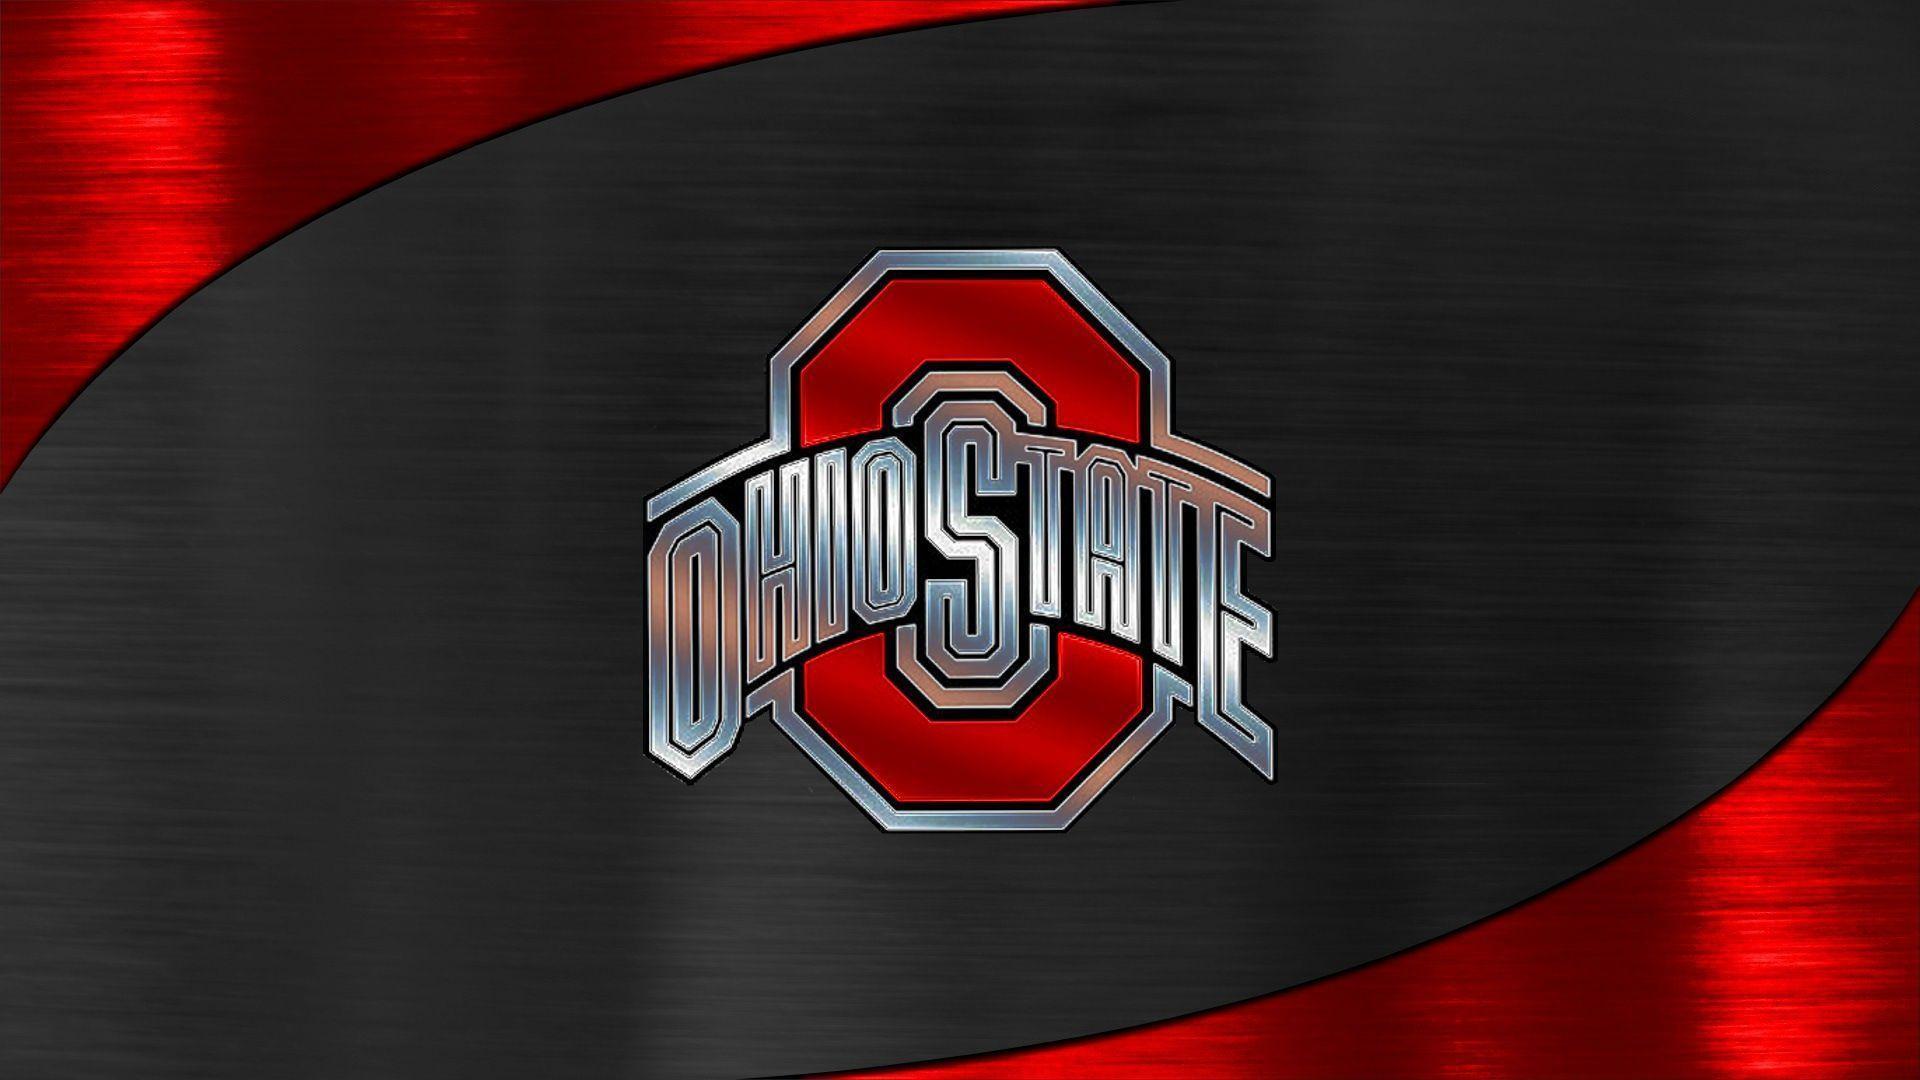 Ohio State Football Logo 21, Photo, Image in High